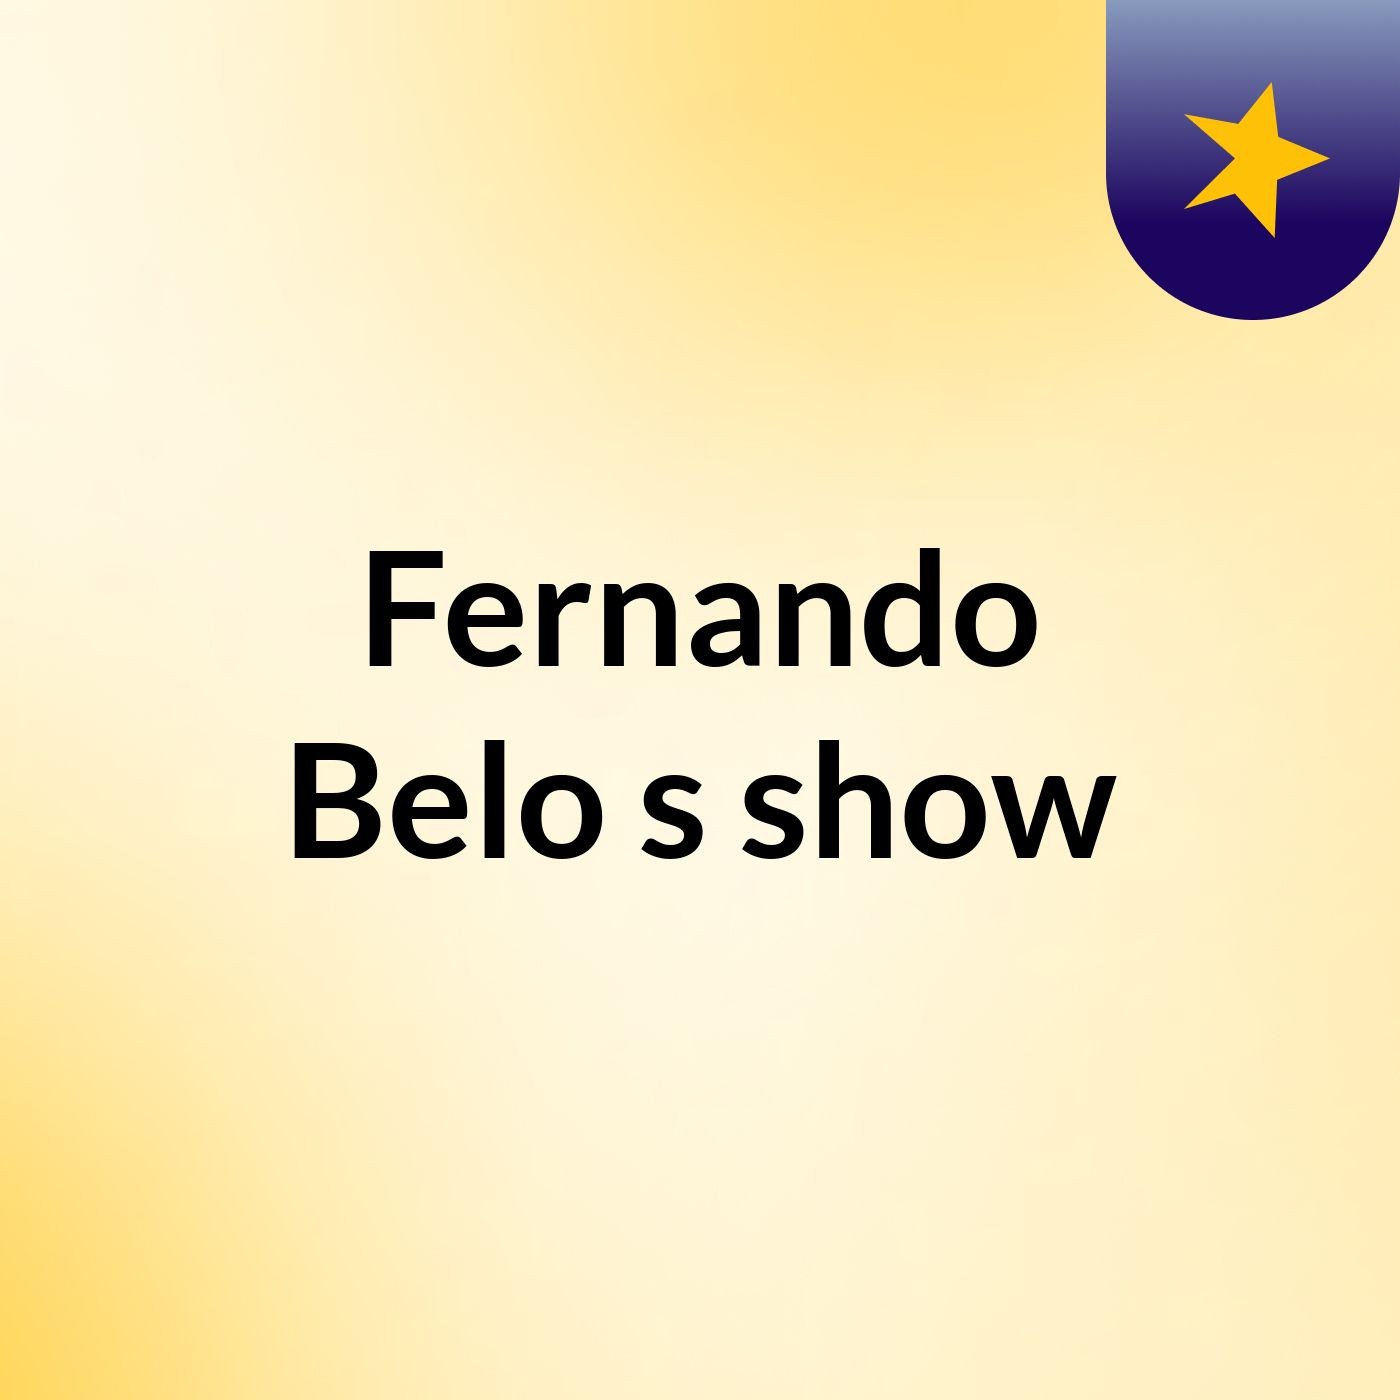 Fernando Belo's show